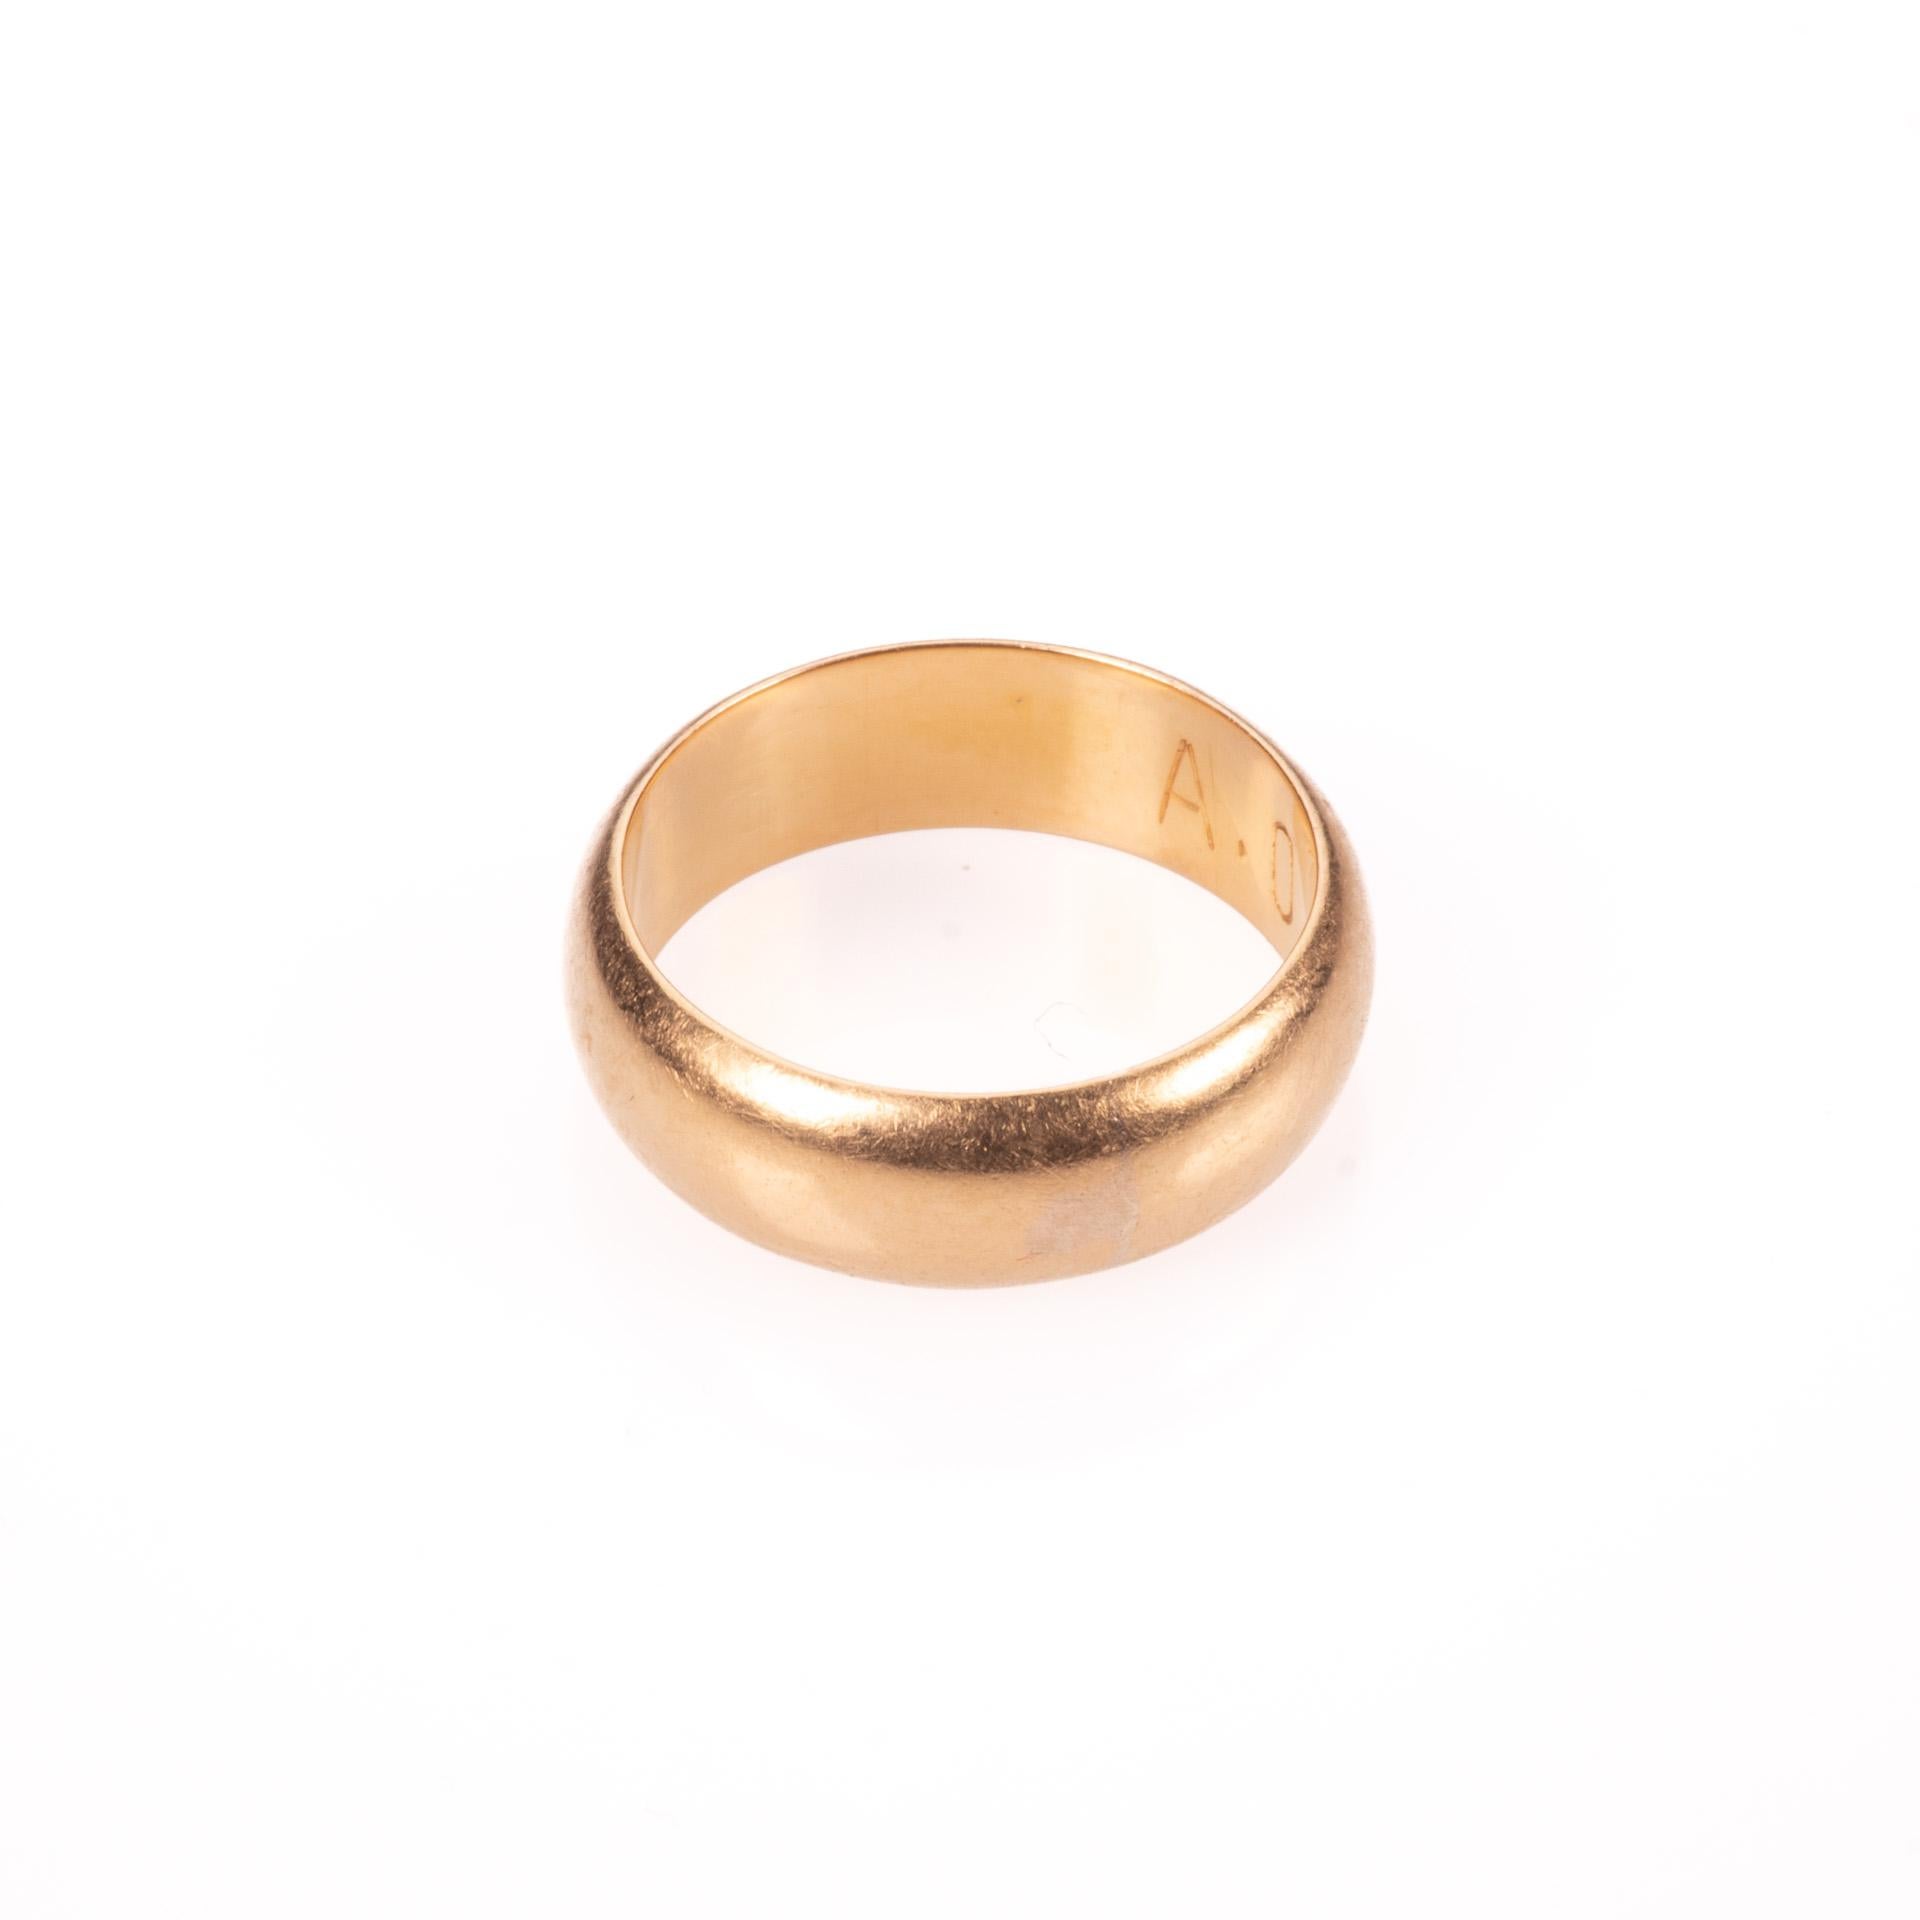 22 Kt Gold Wedding Band Ring 3